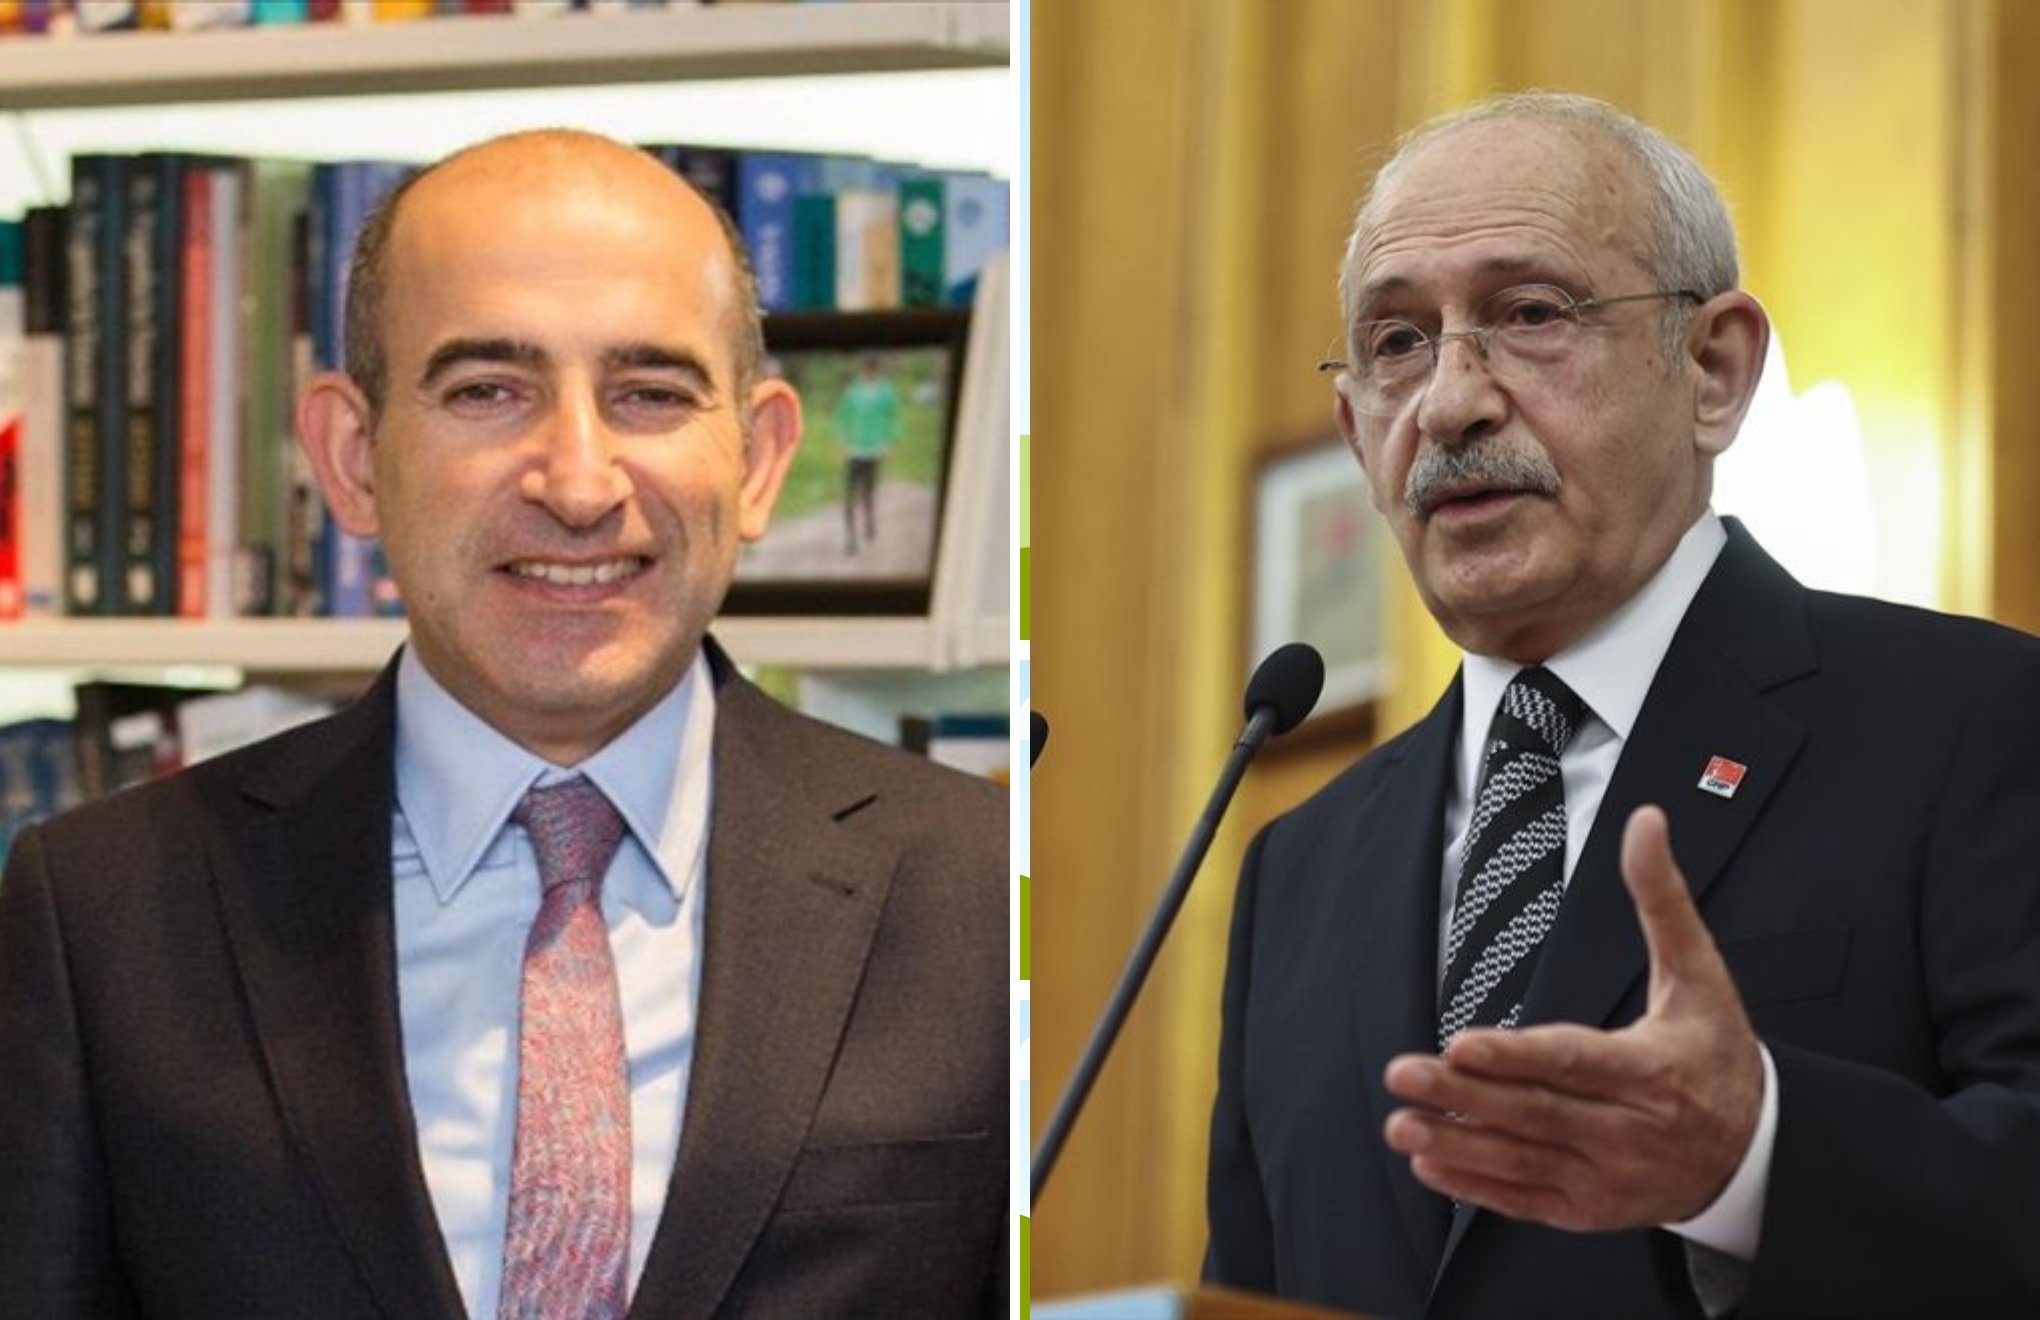 Appointed rector Bulu responds to CHP Chair Kılıçdaroğlu’s criticisms